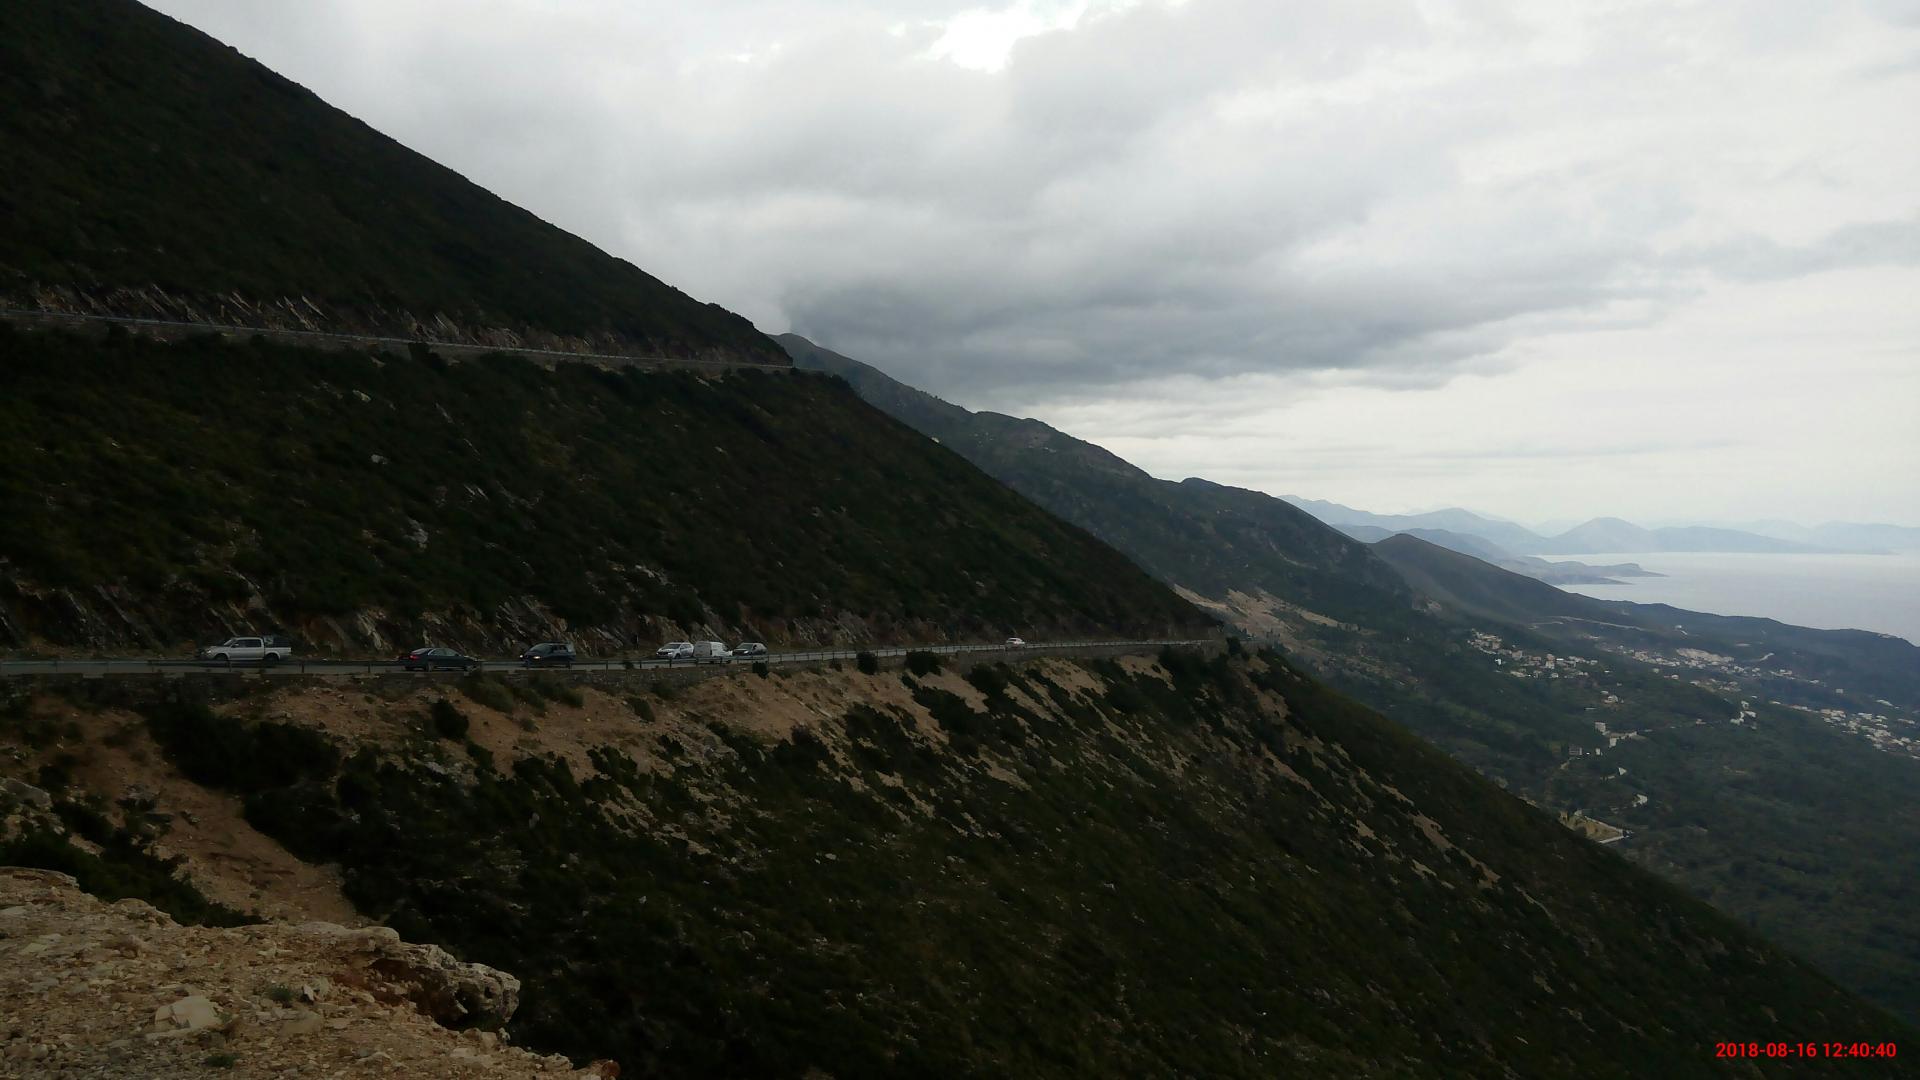 The Llogara Pass in Albania